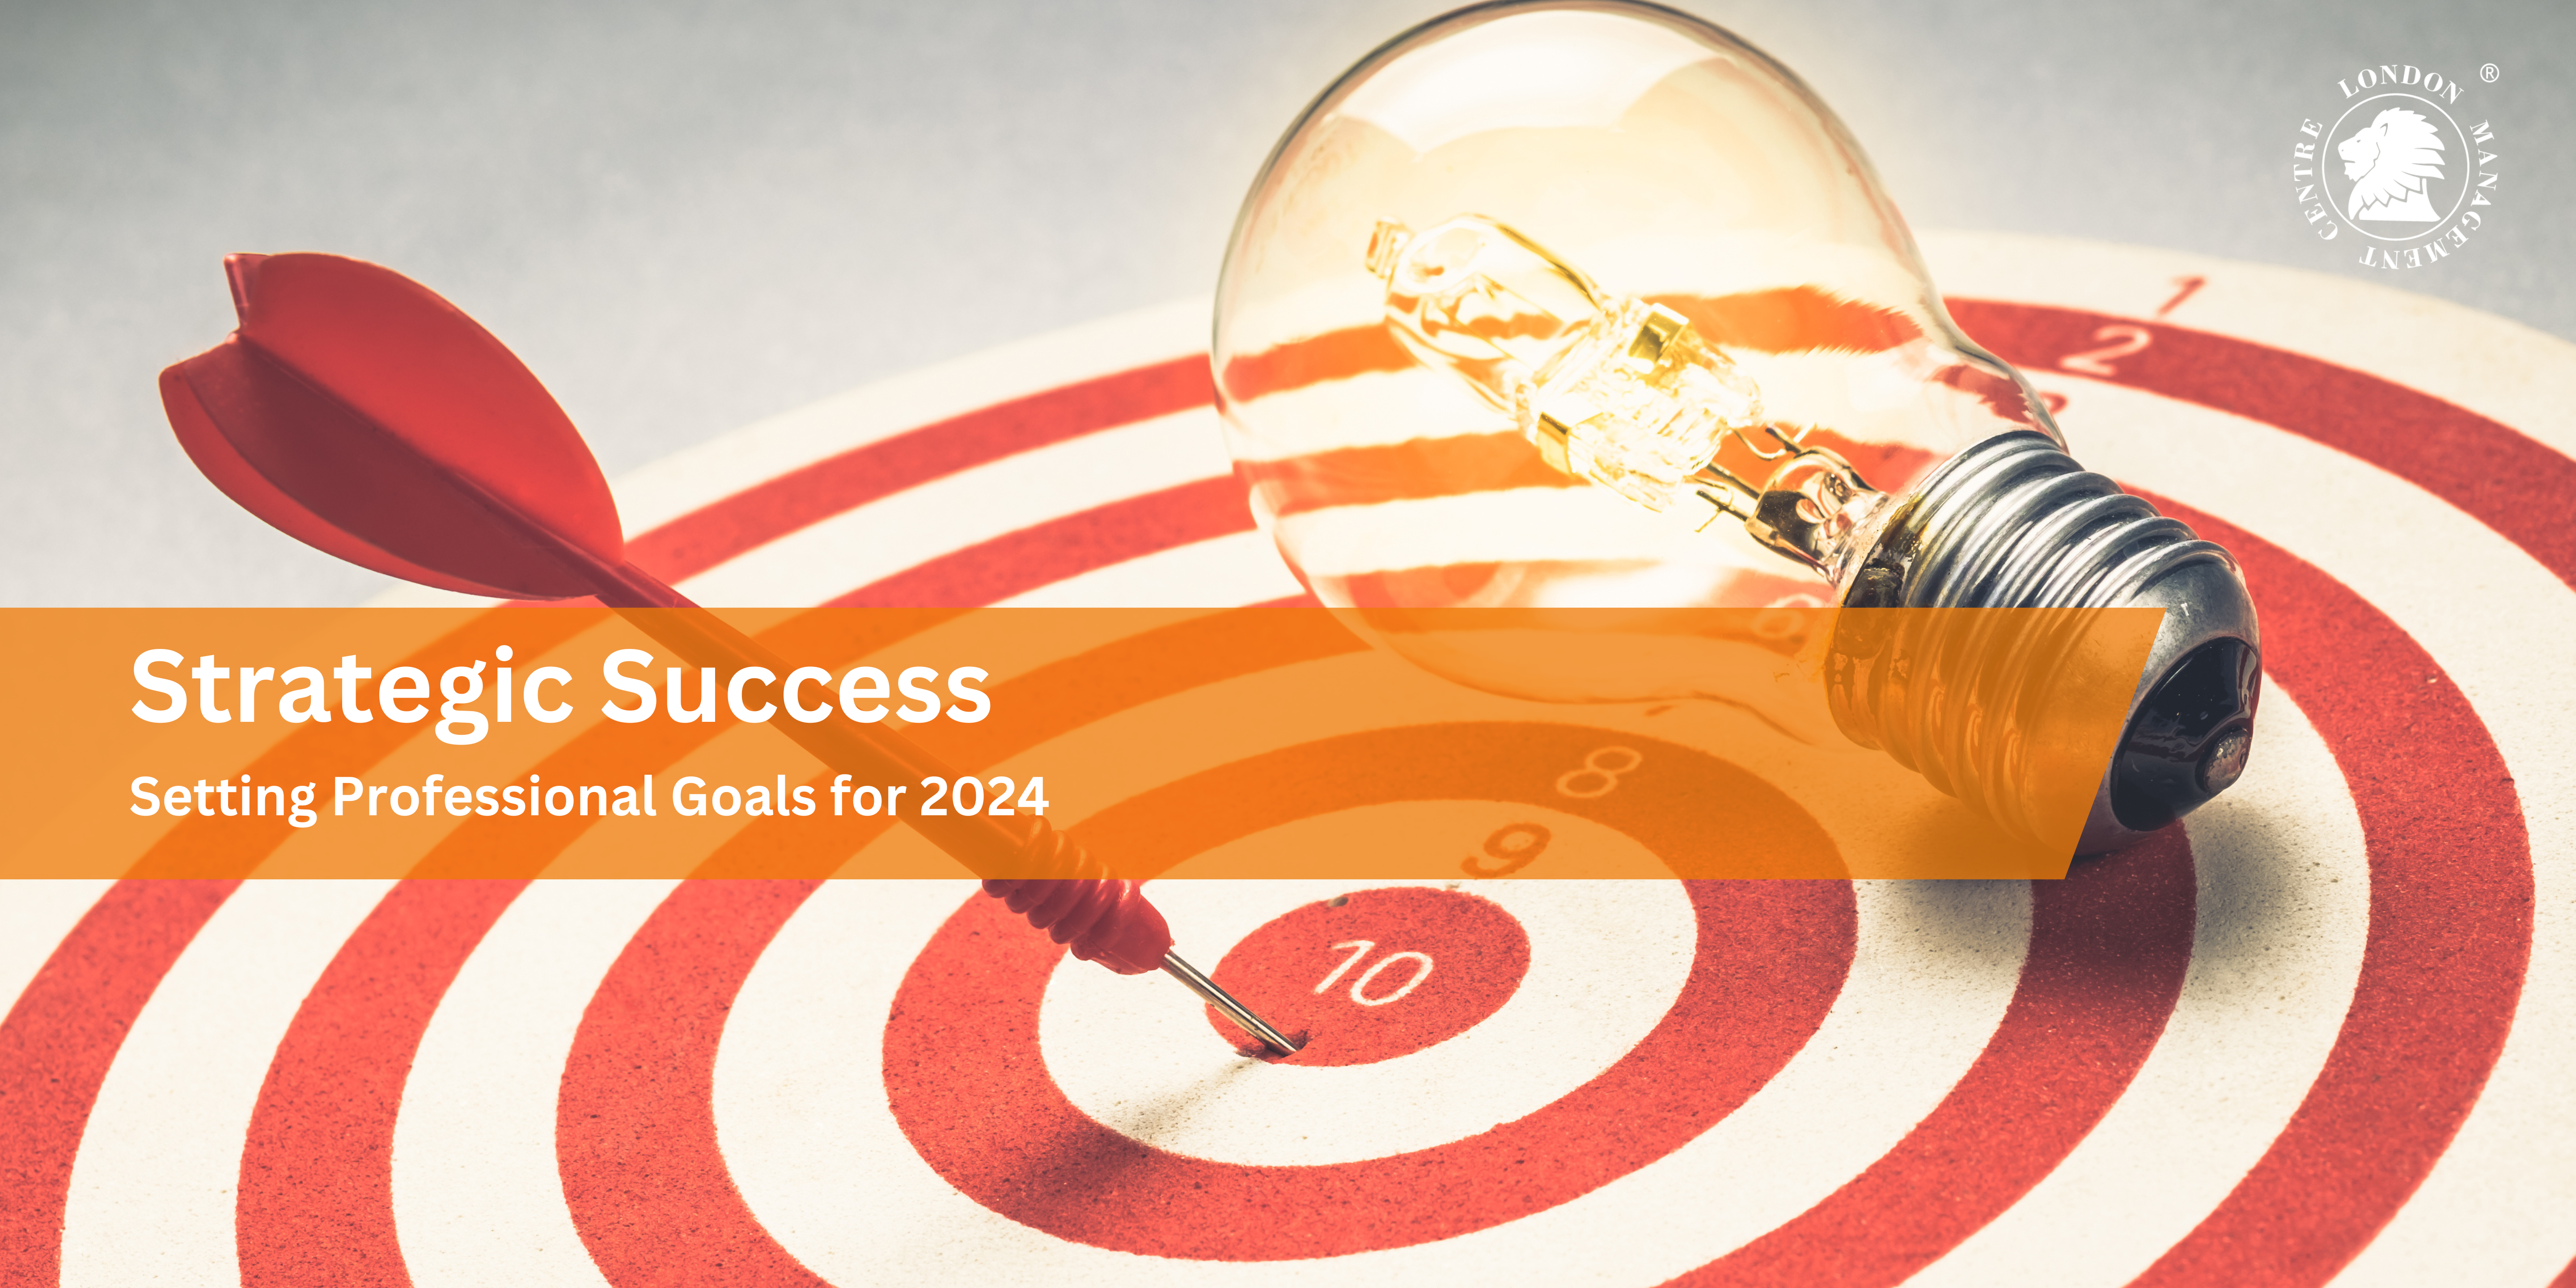 Strategic Success: Setting Professional Goals for 2024